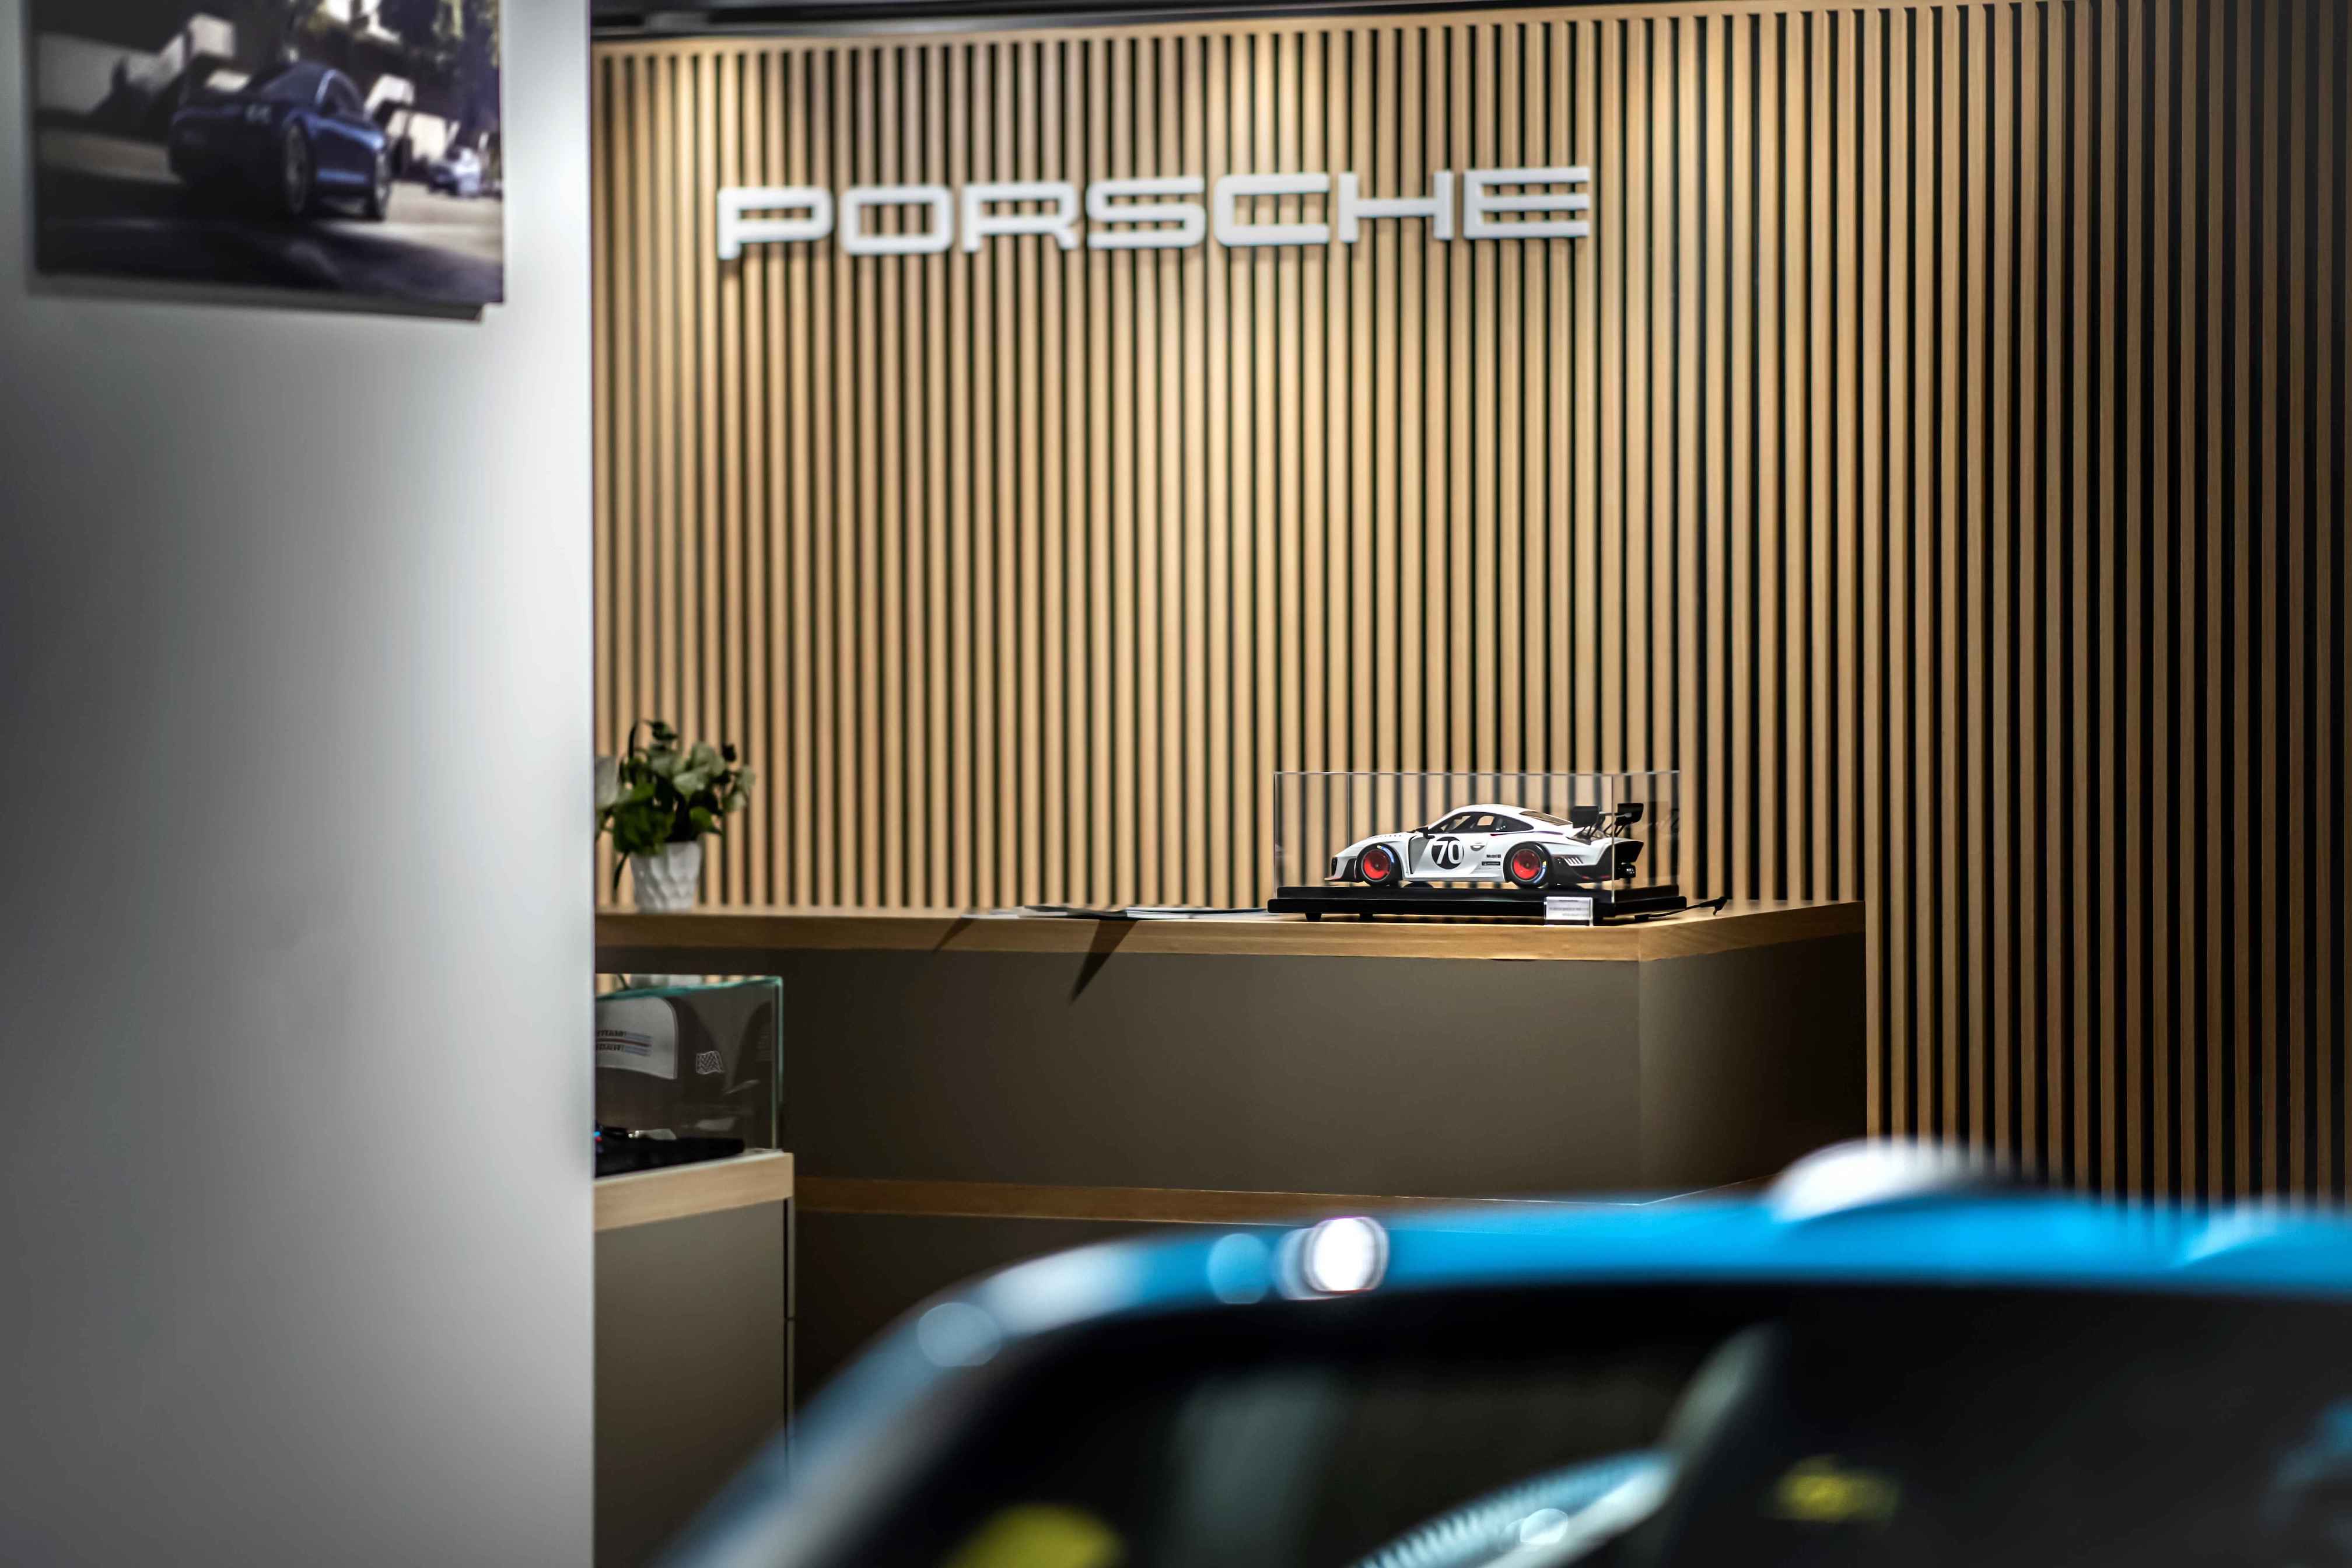 Porsche NOW 全新型態概念店專屬規劃的 VIP Lounge 提供優雅隱密的鑑賞空間。